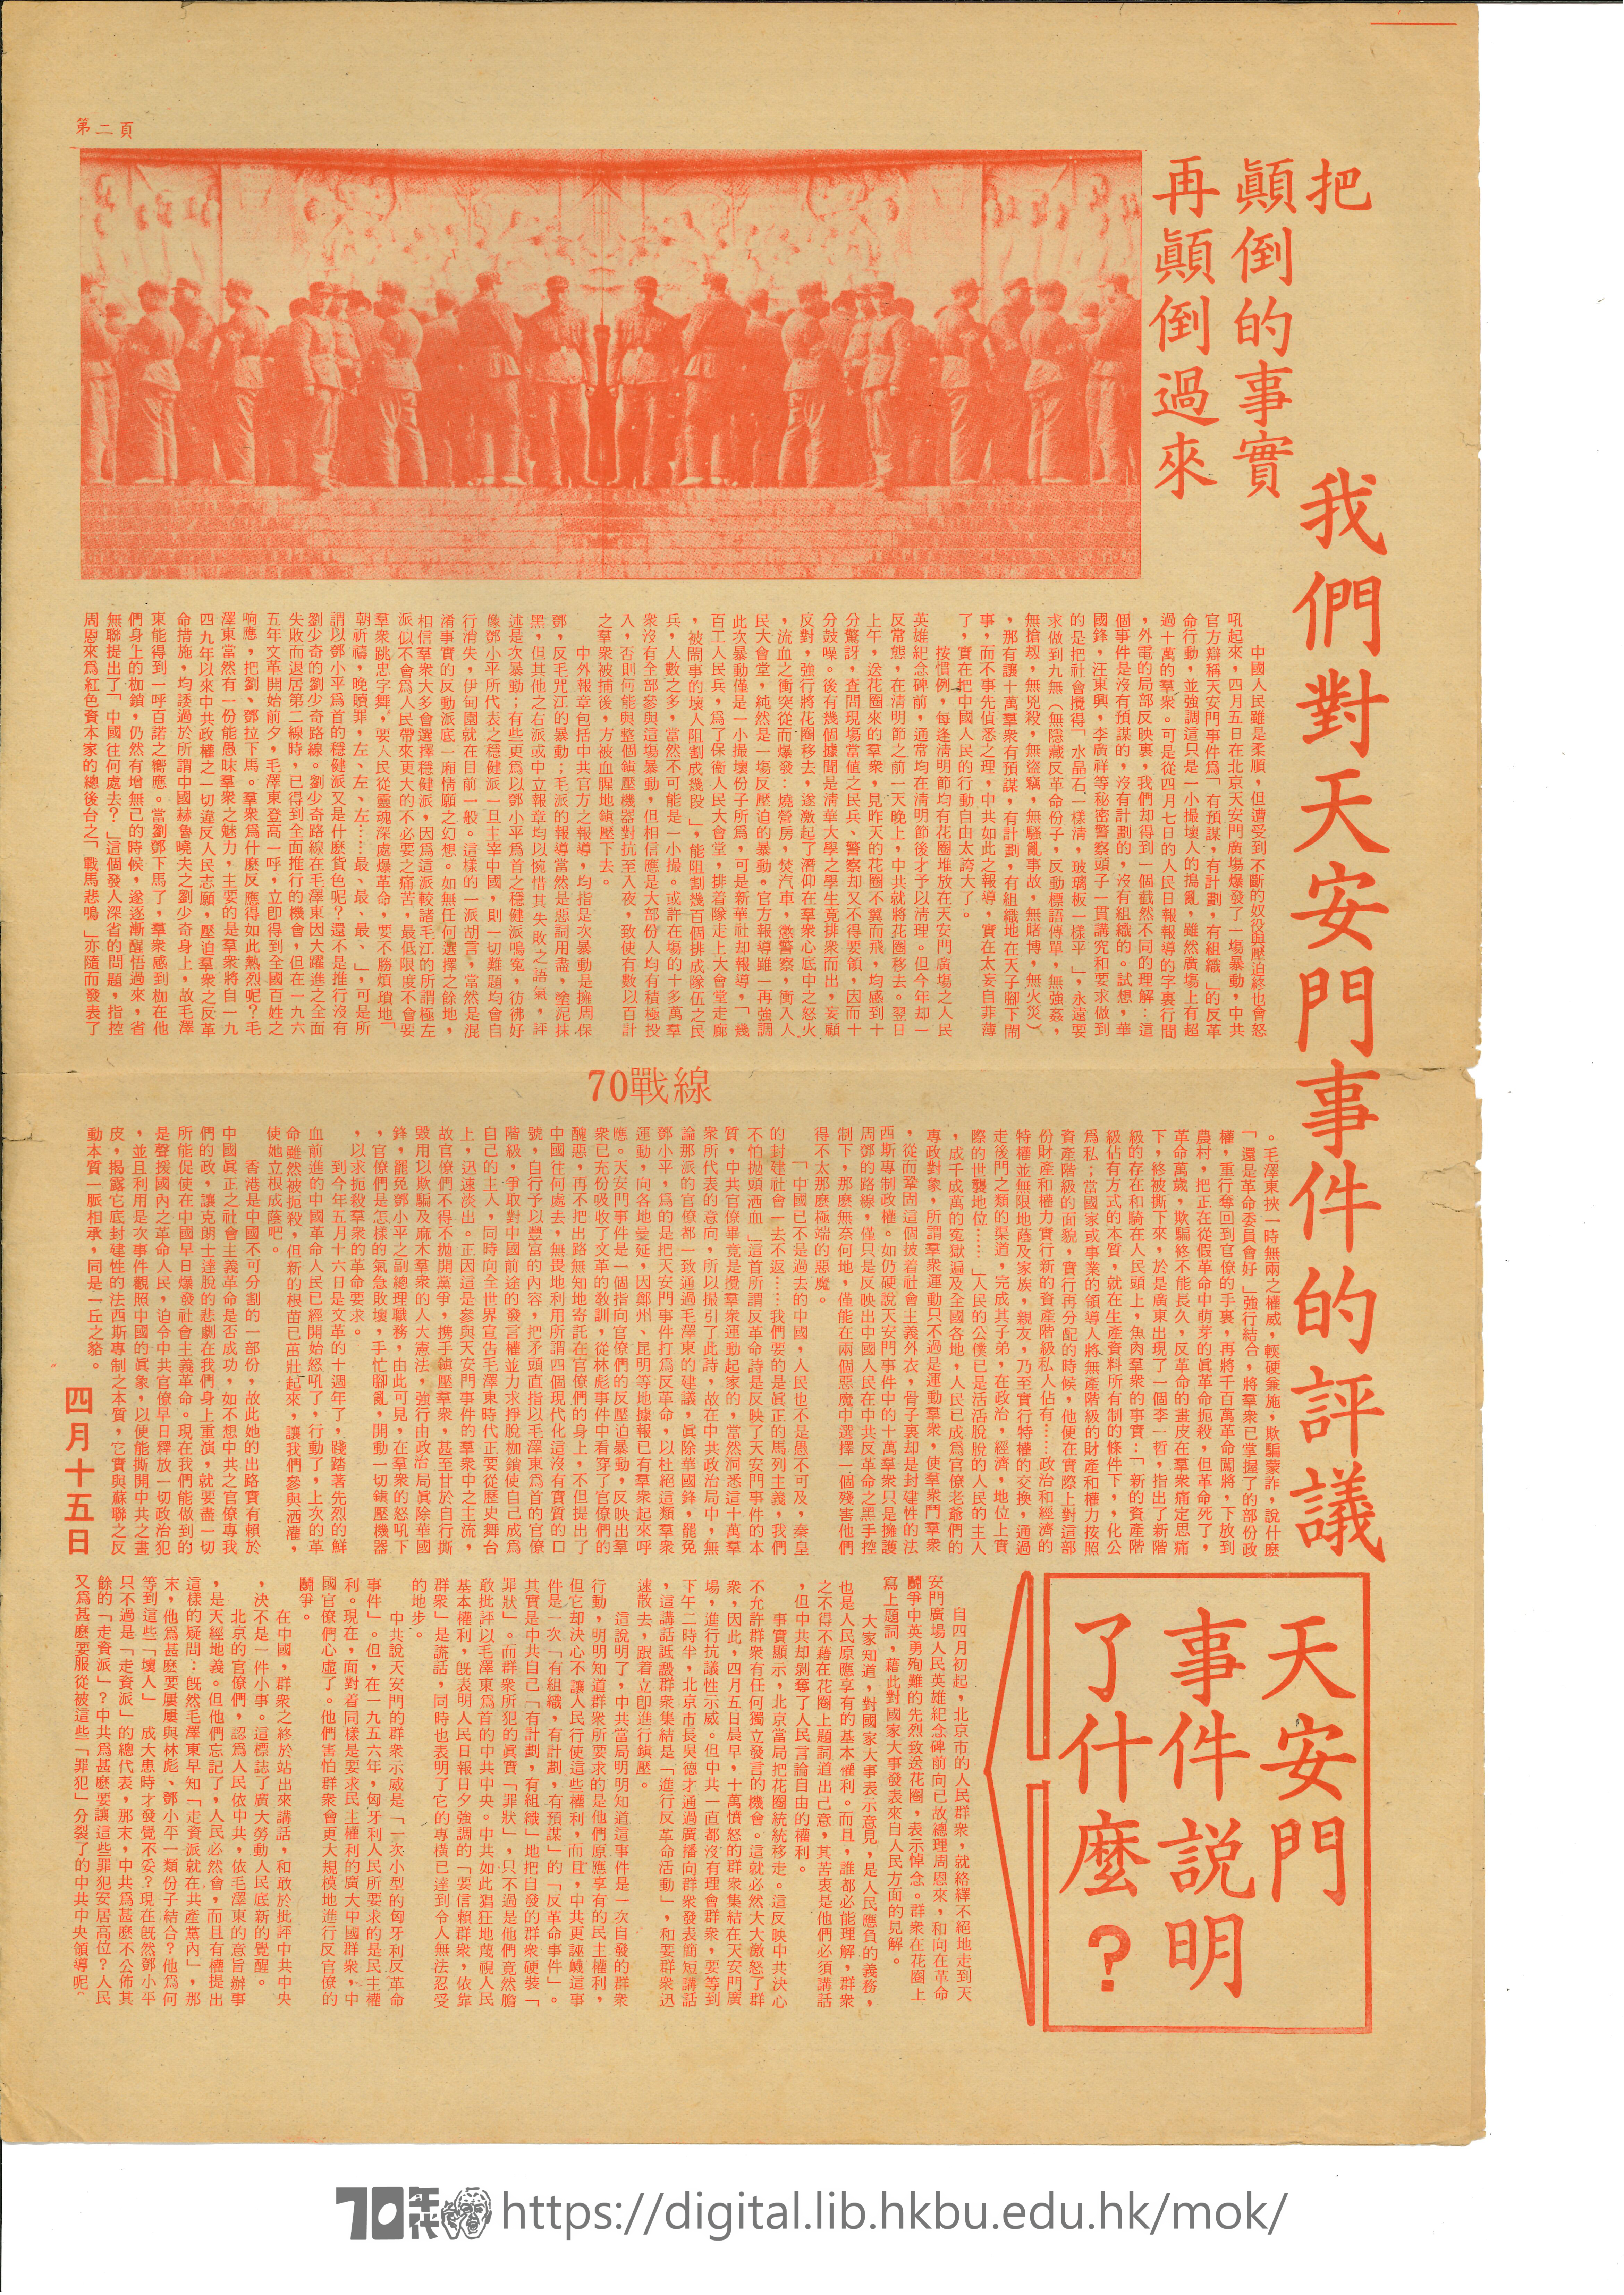   Special issue on Tiananmen Incident 青年戰線, 社會主義青年社, 戰訊, 70戰綫 